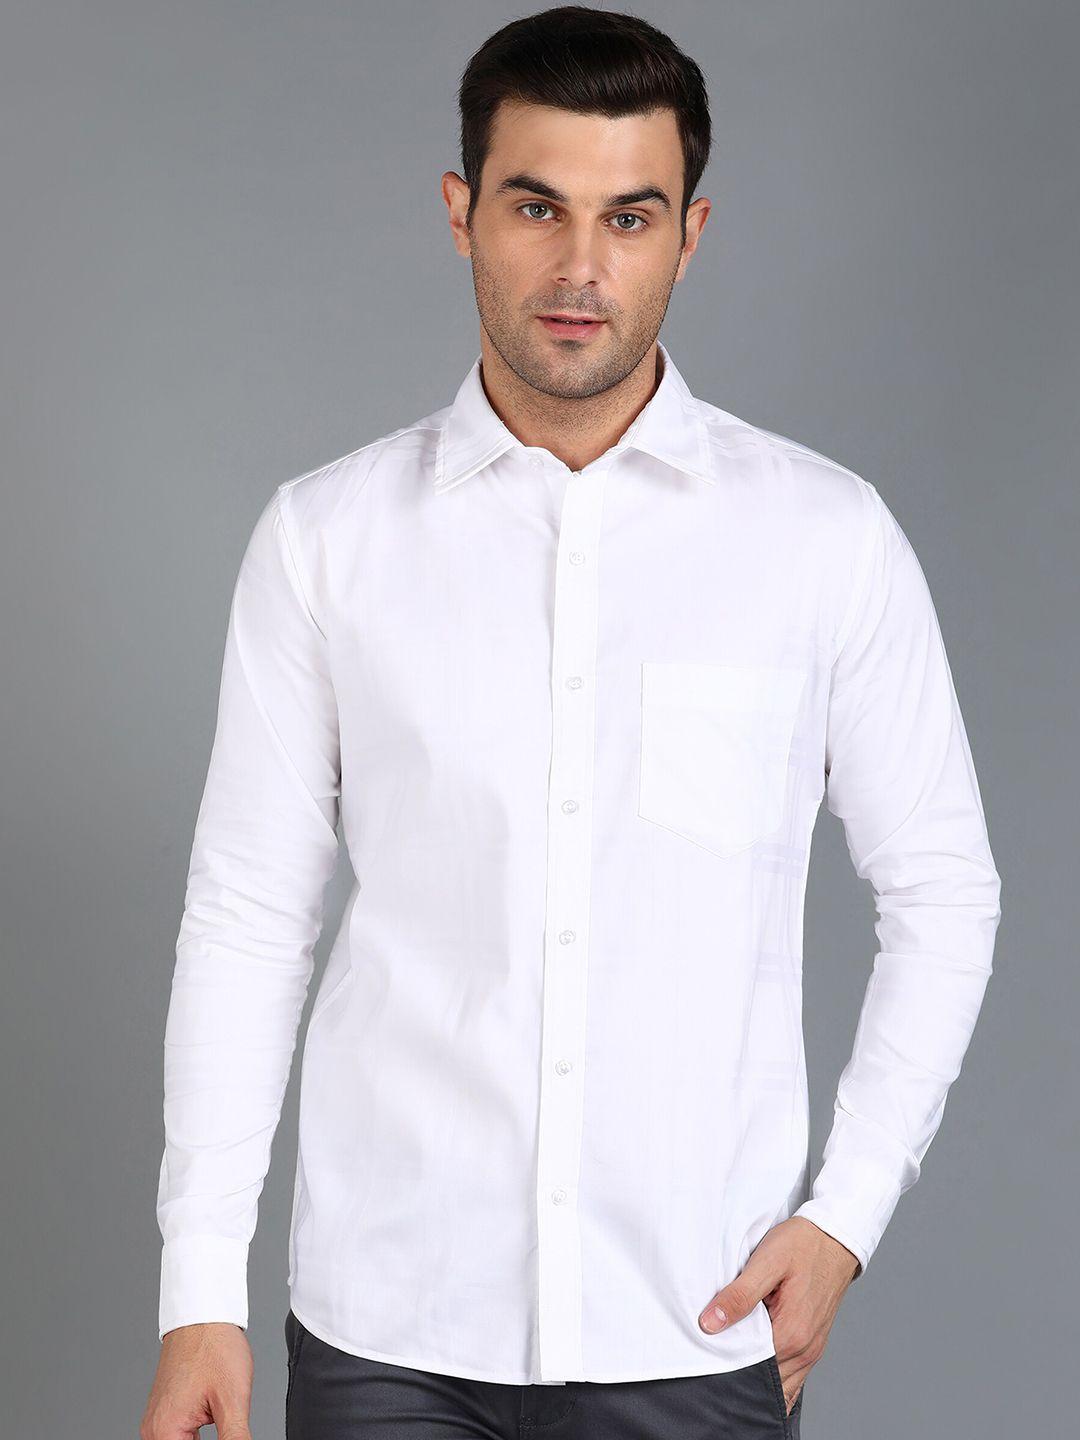 znx-clothing-men-white-premium-slim-fit-opaque-formal-shirt